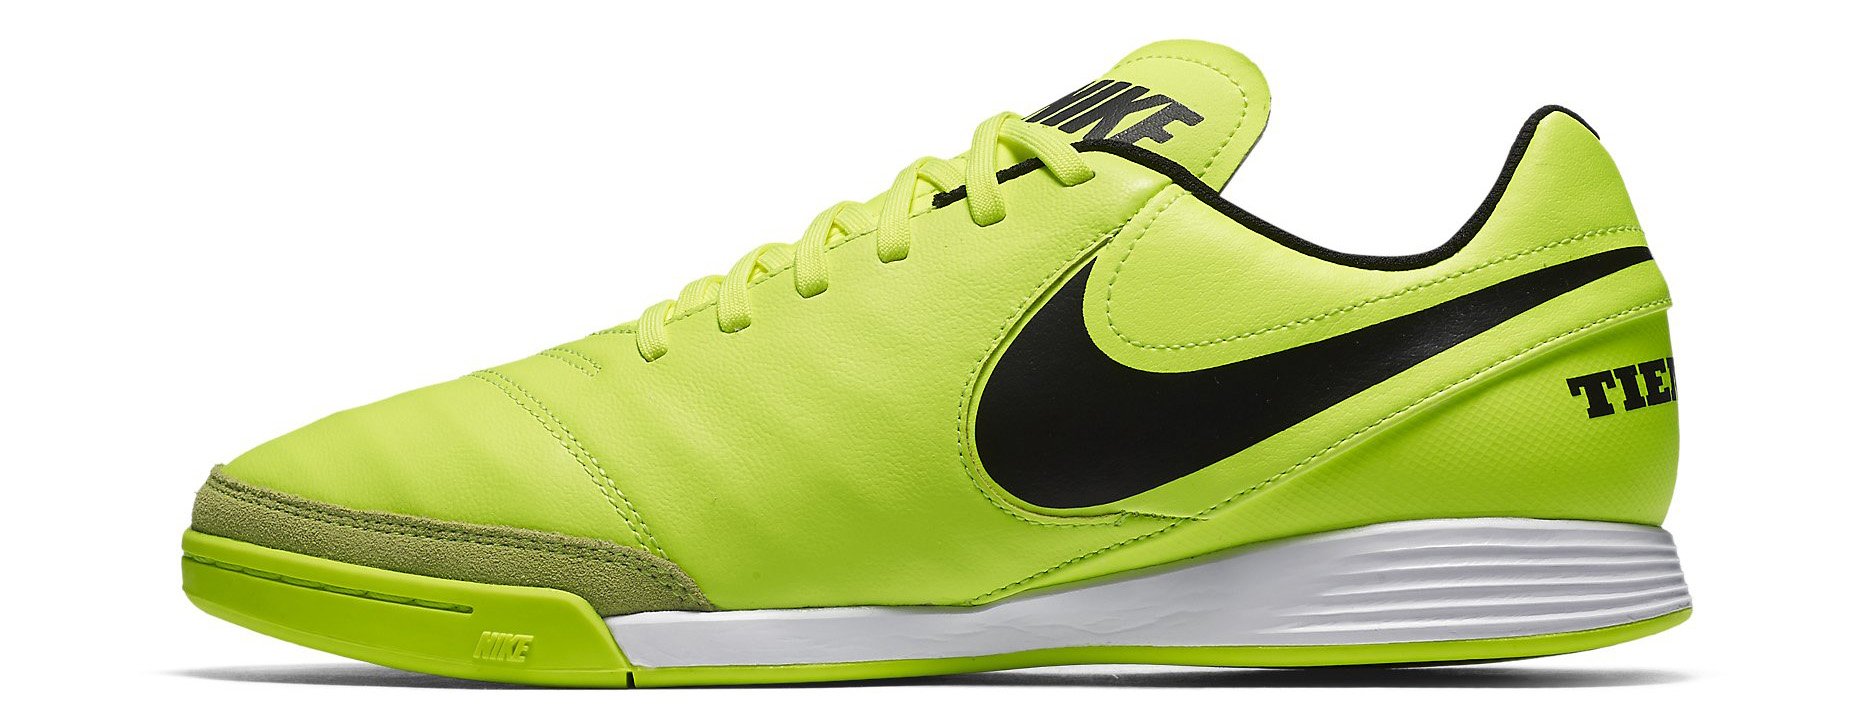 Indoor/court shoes Nike TIEMPOX GENIO 